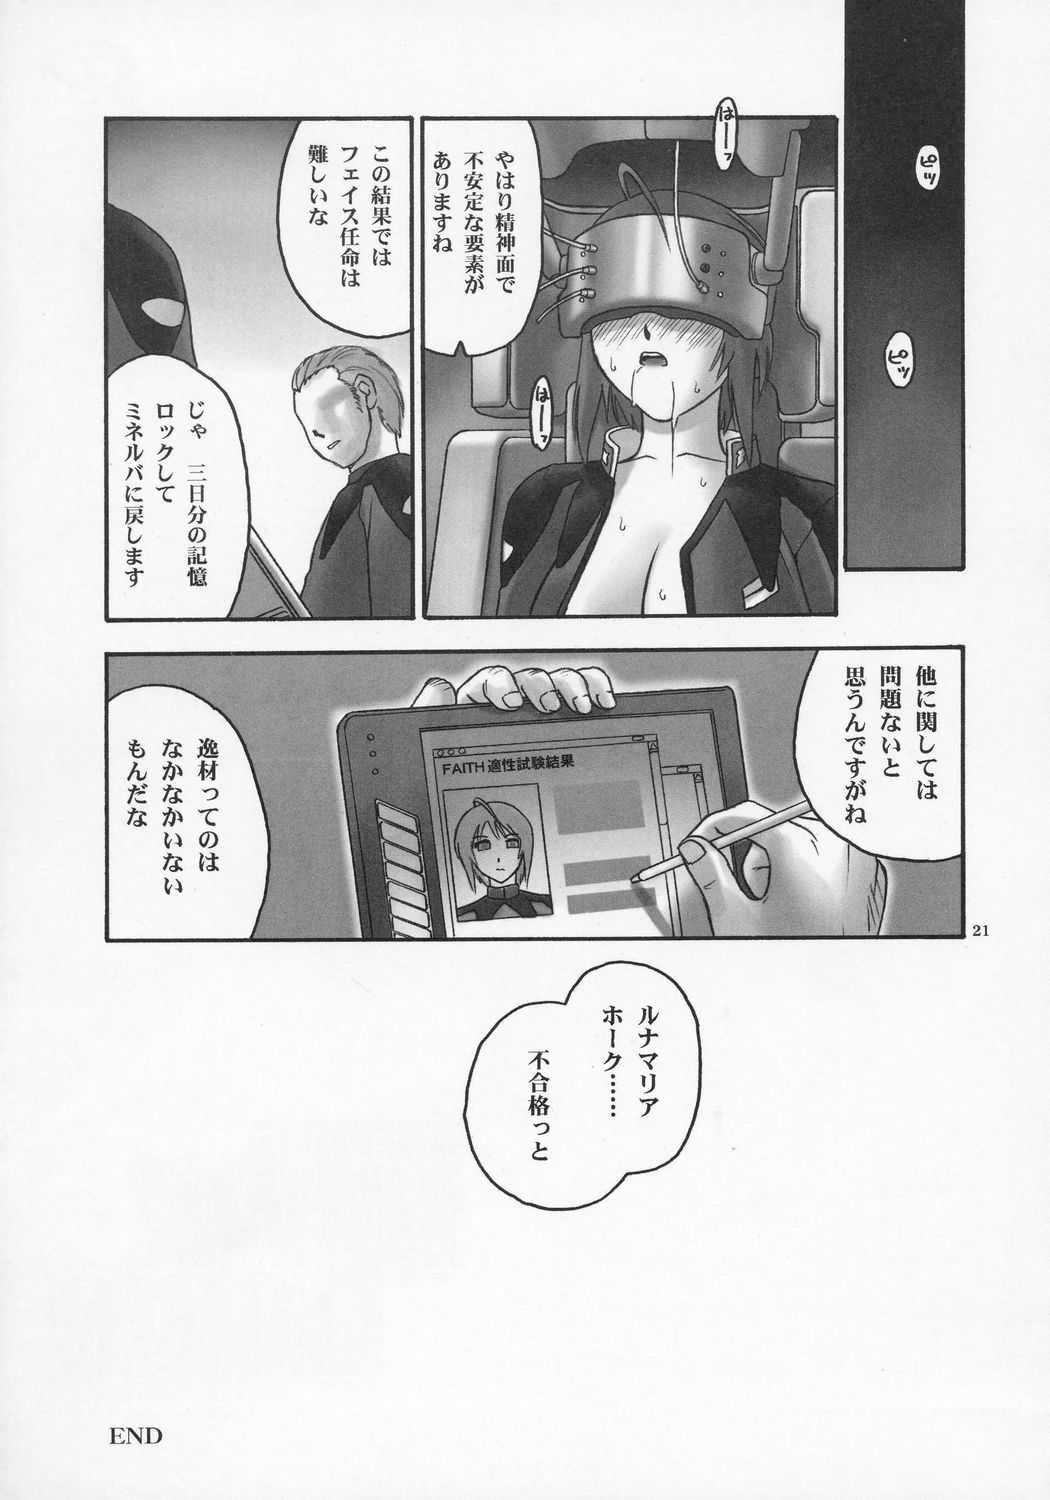 [Hellabunna] Giant Comics 26 - Black Pants Hack Down [Gundam Seed Destiny] 